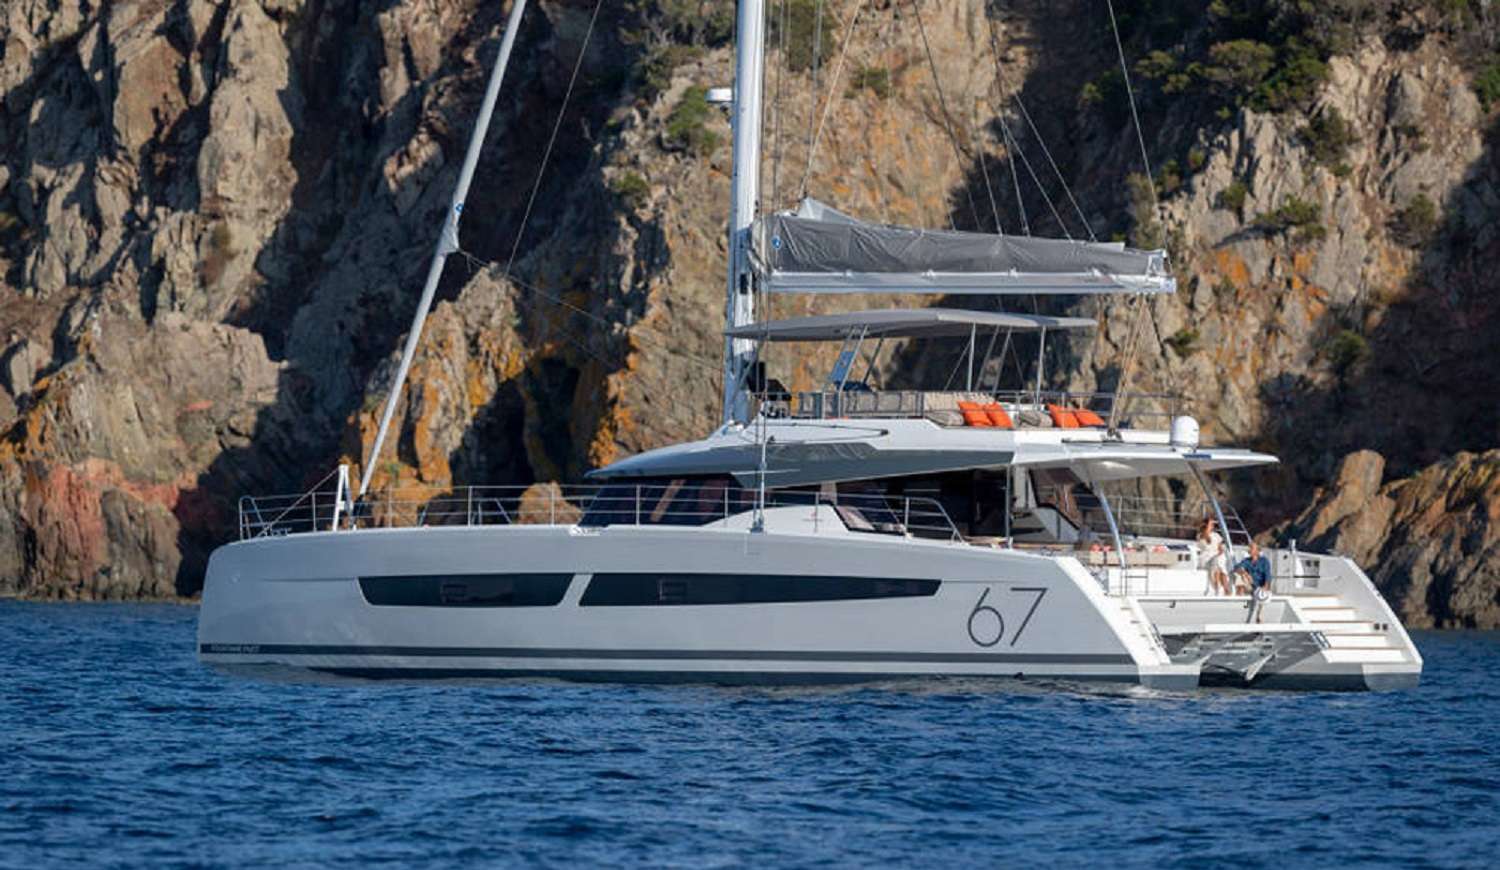 LOOMA - Yacht Charter Poltu Quatu & Boat hire in W. Med -Naples/Sicily, Greece, W. Med -Riviera/Cors/Sard., Turkey, Croatia | Winter: Caribbean Virgin Islands (US/BVI), Caribbean Leewards, Caribbean Windwards 2